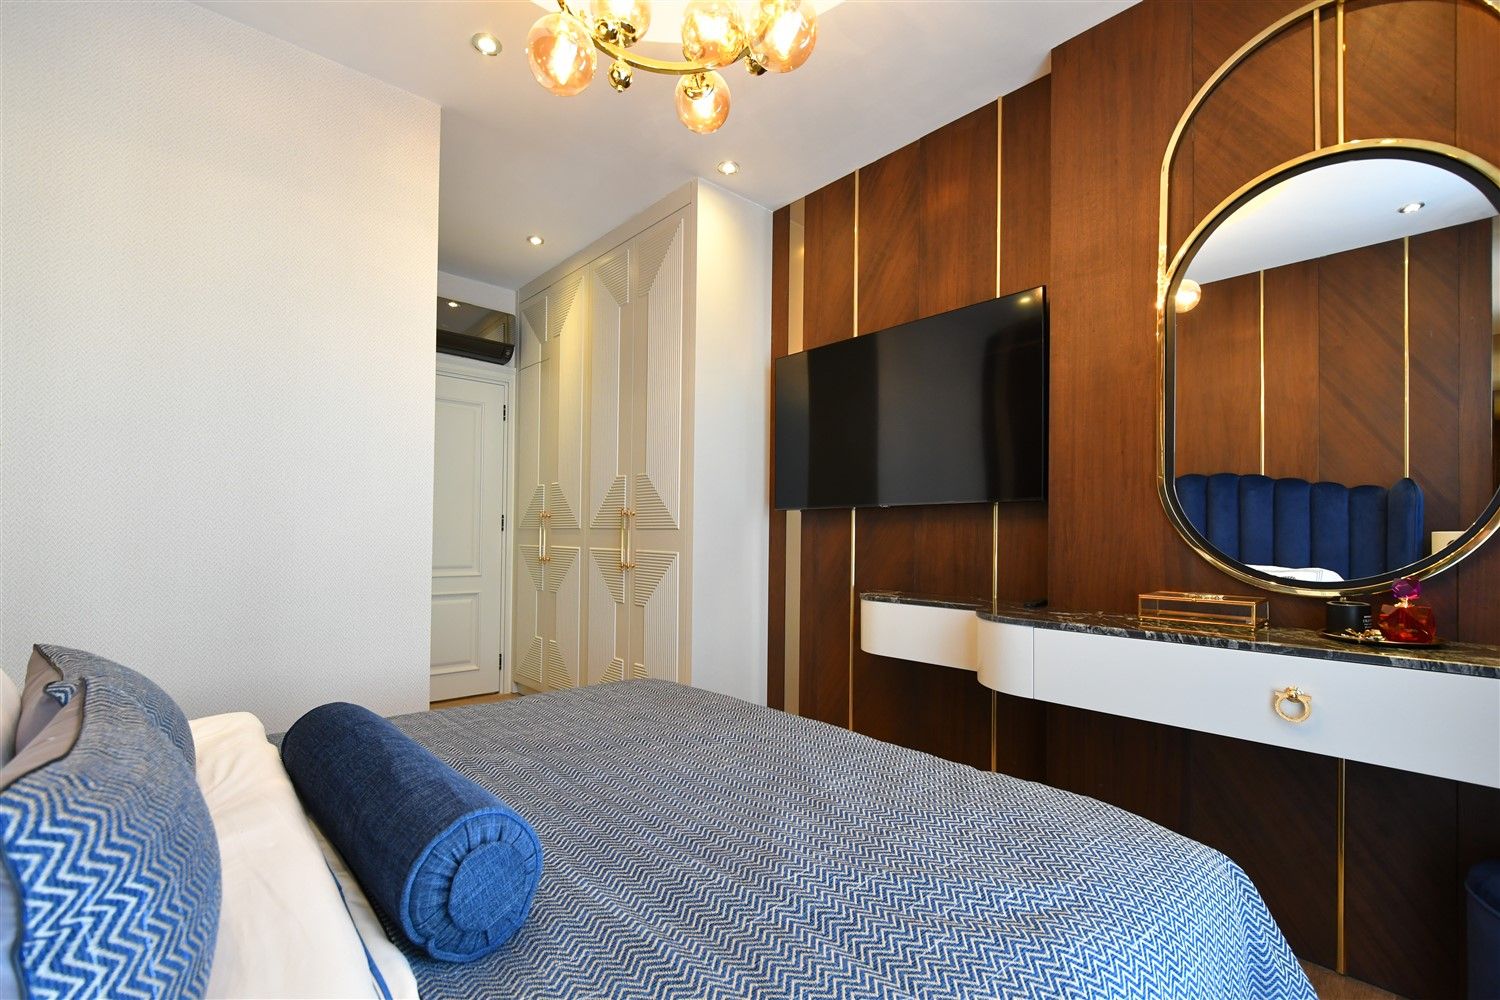 2 bedrooms furnished apartment, first coastline